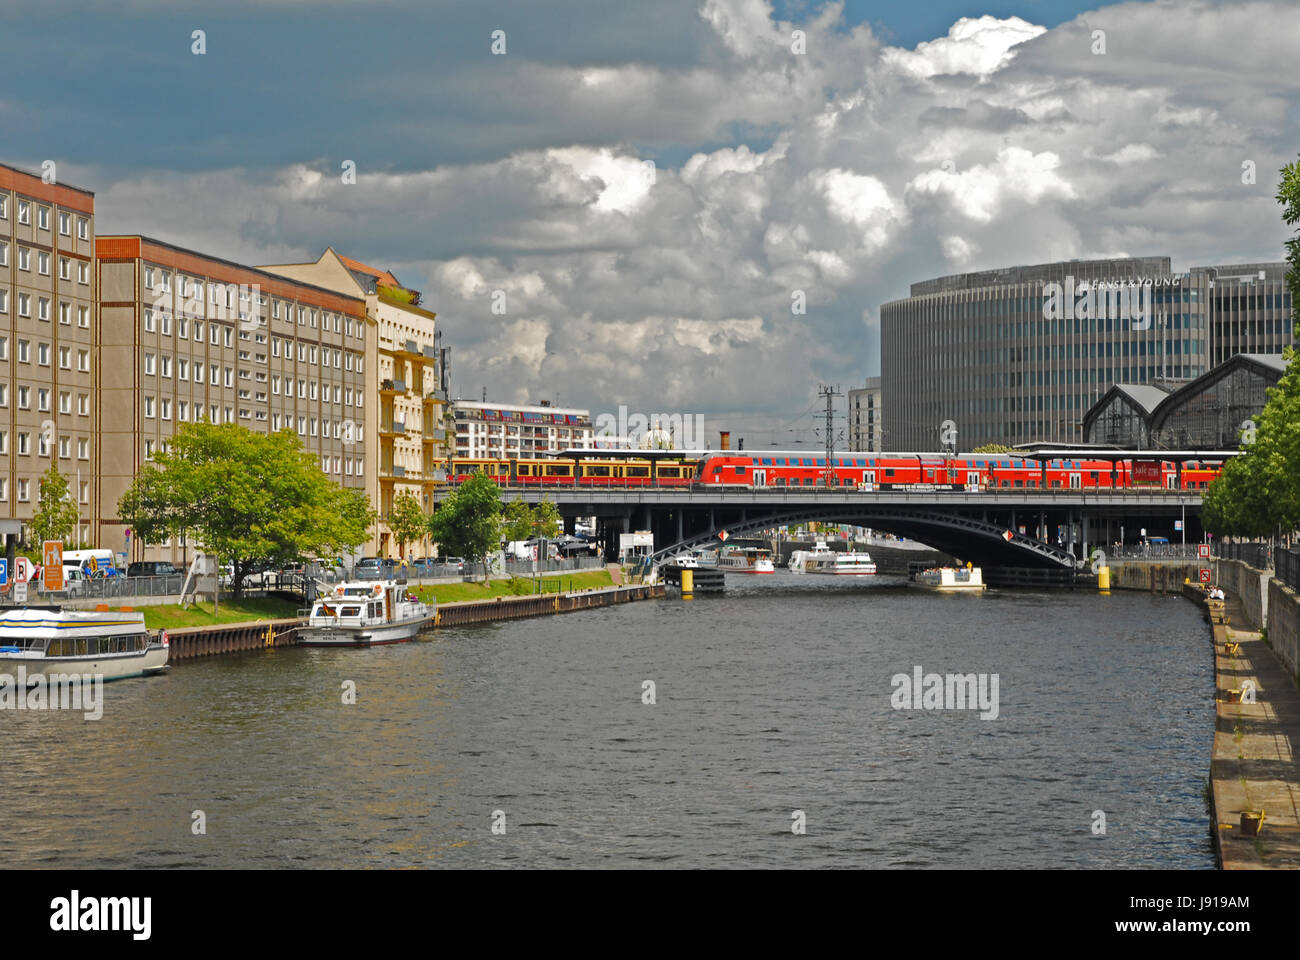 station, bridge, berlin, pre, station, railway, locomotive, train, engine, Stock Photo